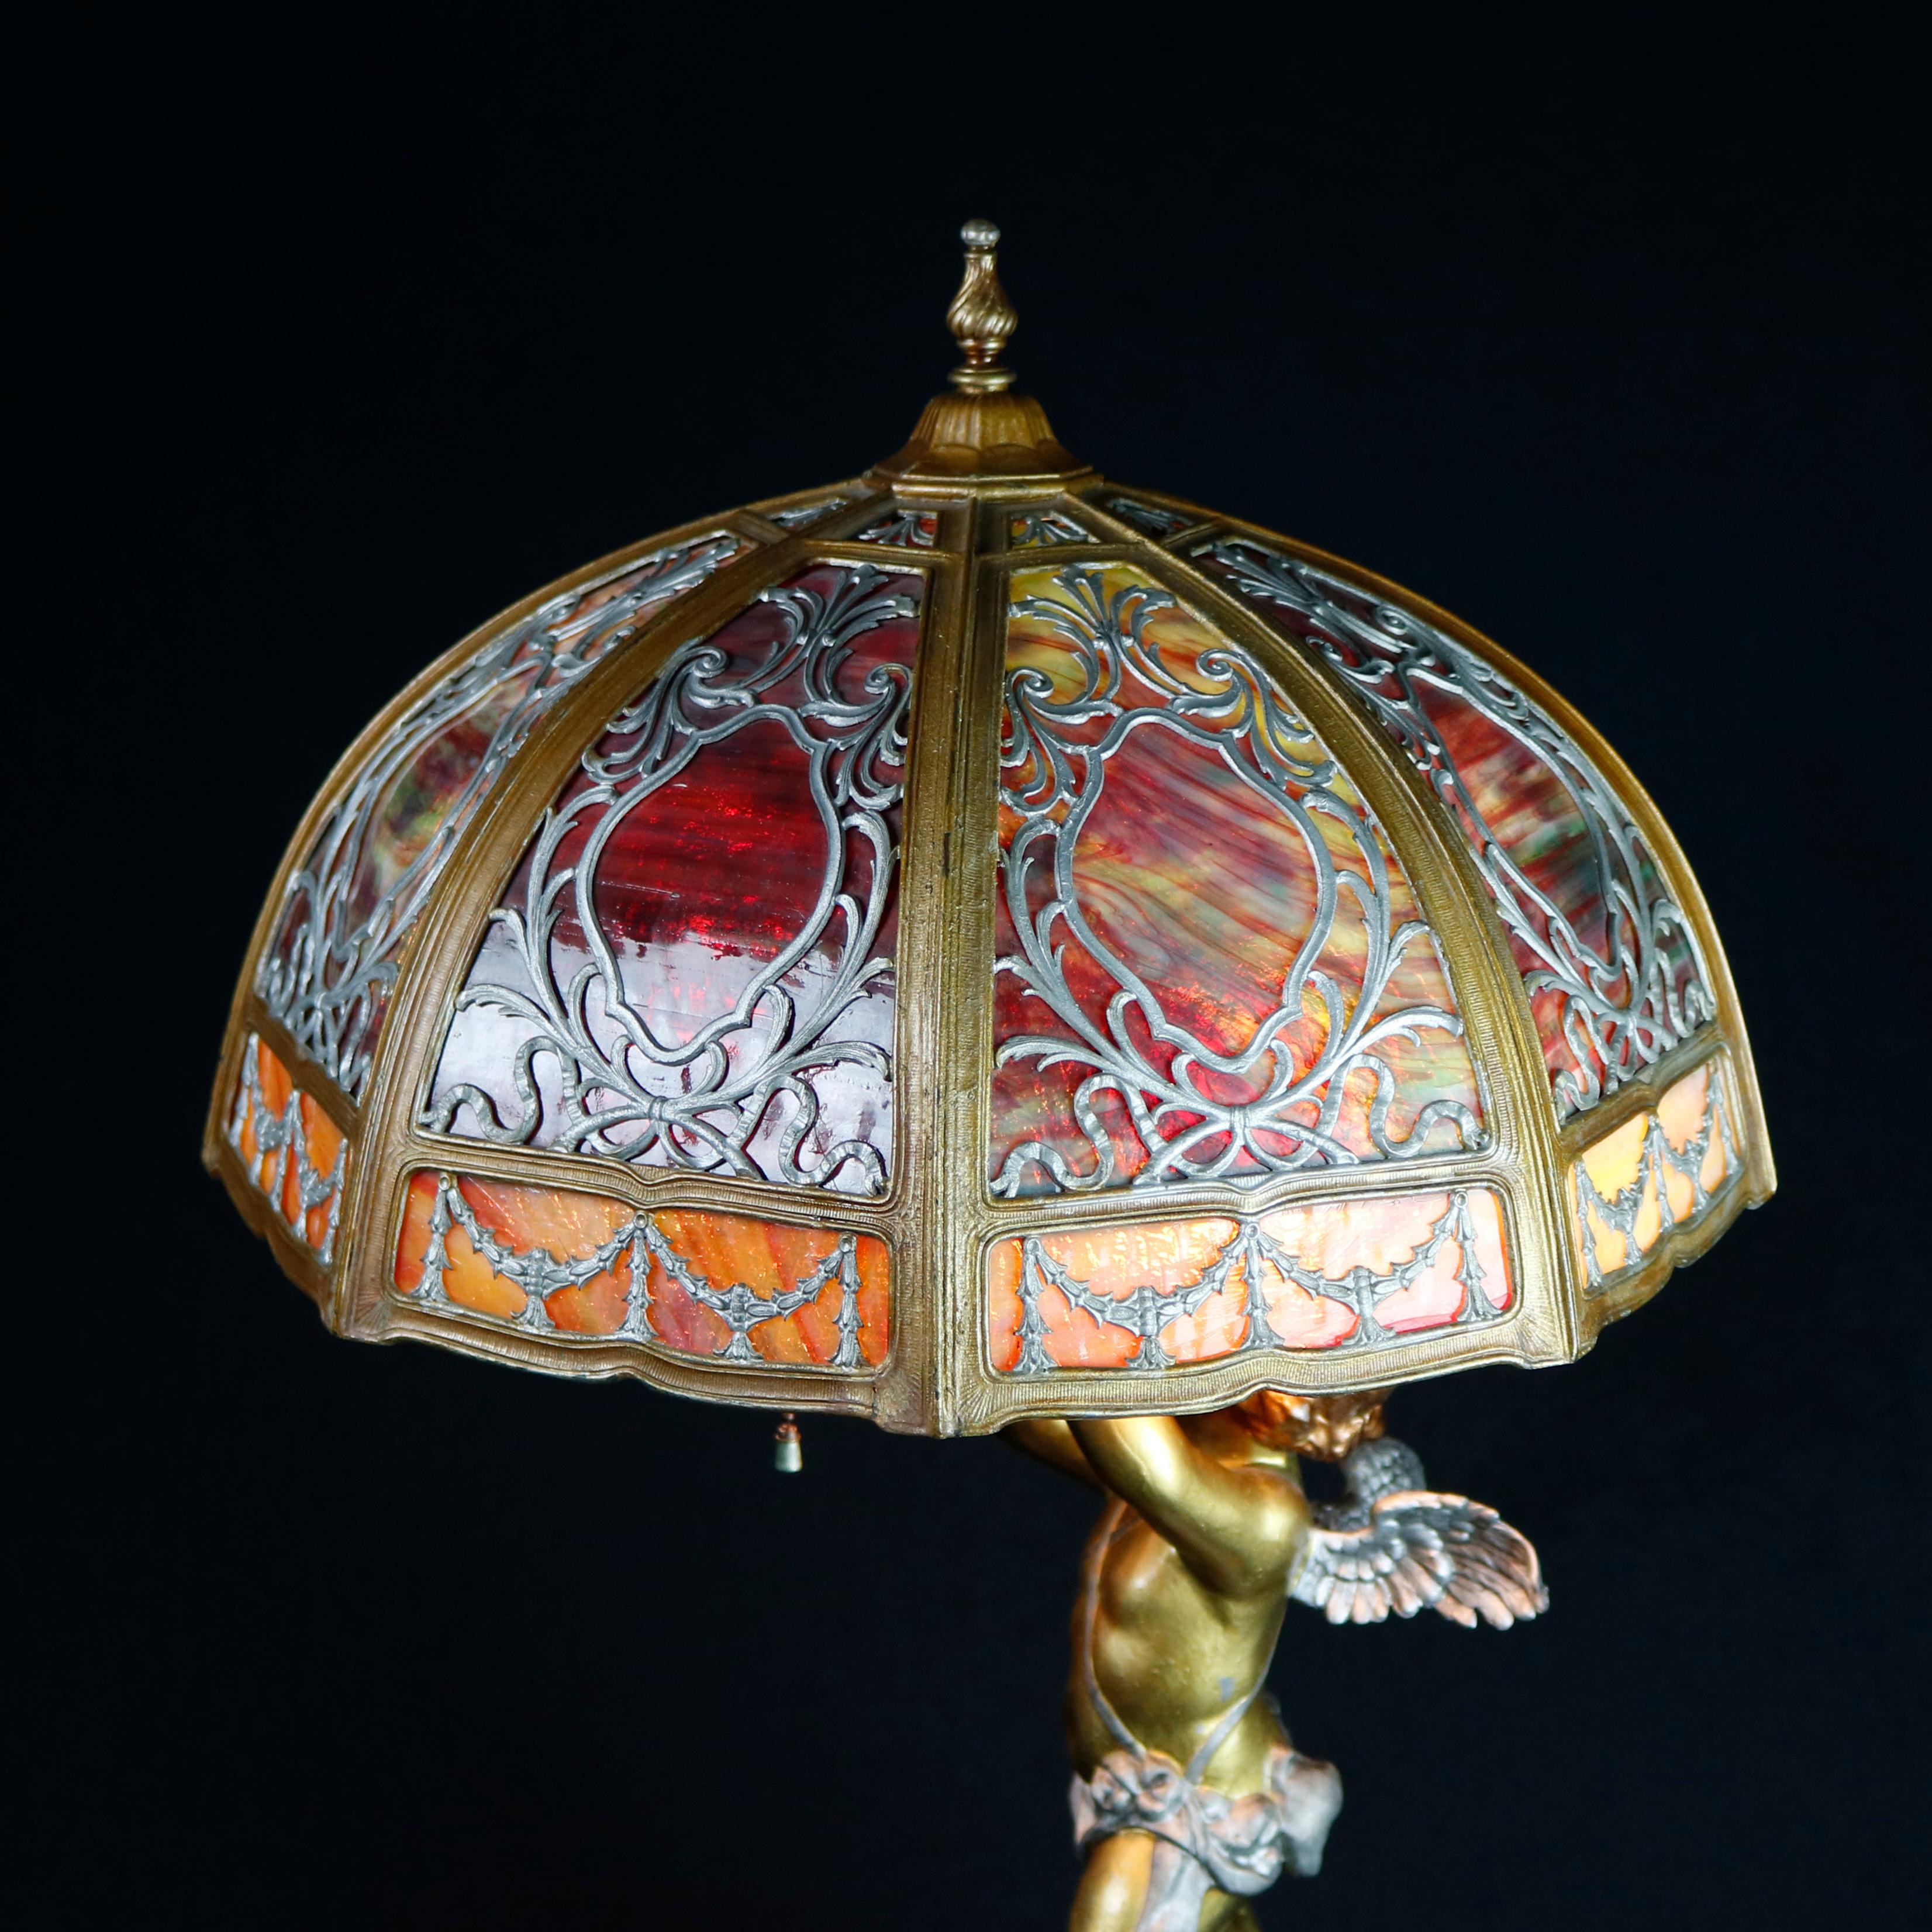 Metal Antique Bradley & Hubbard School Figural Cherub Slag Glass Lamp, circa 1920